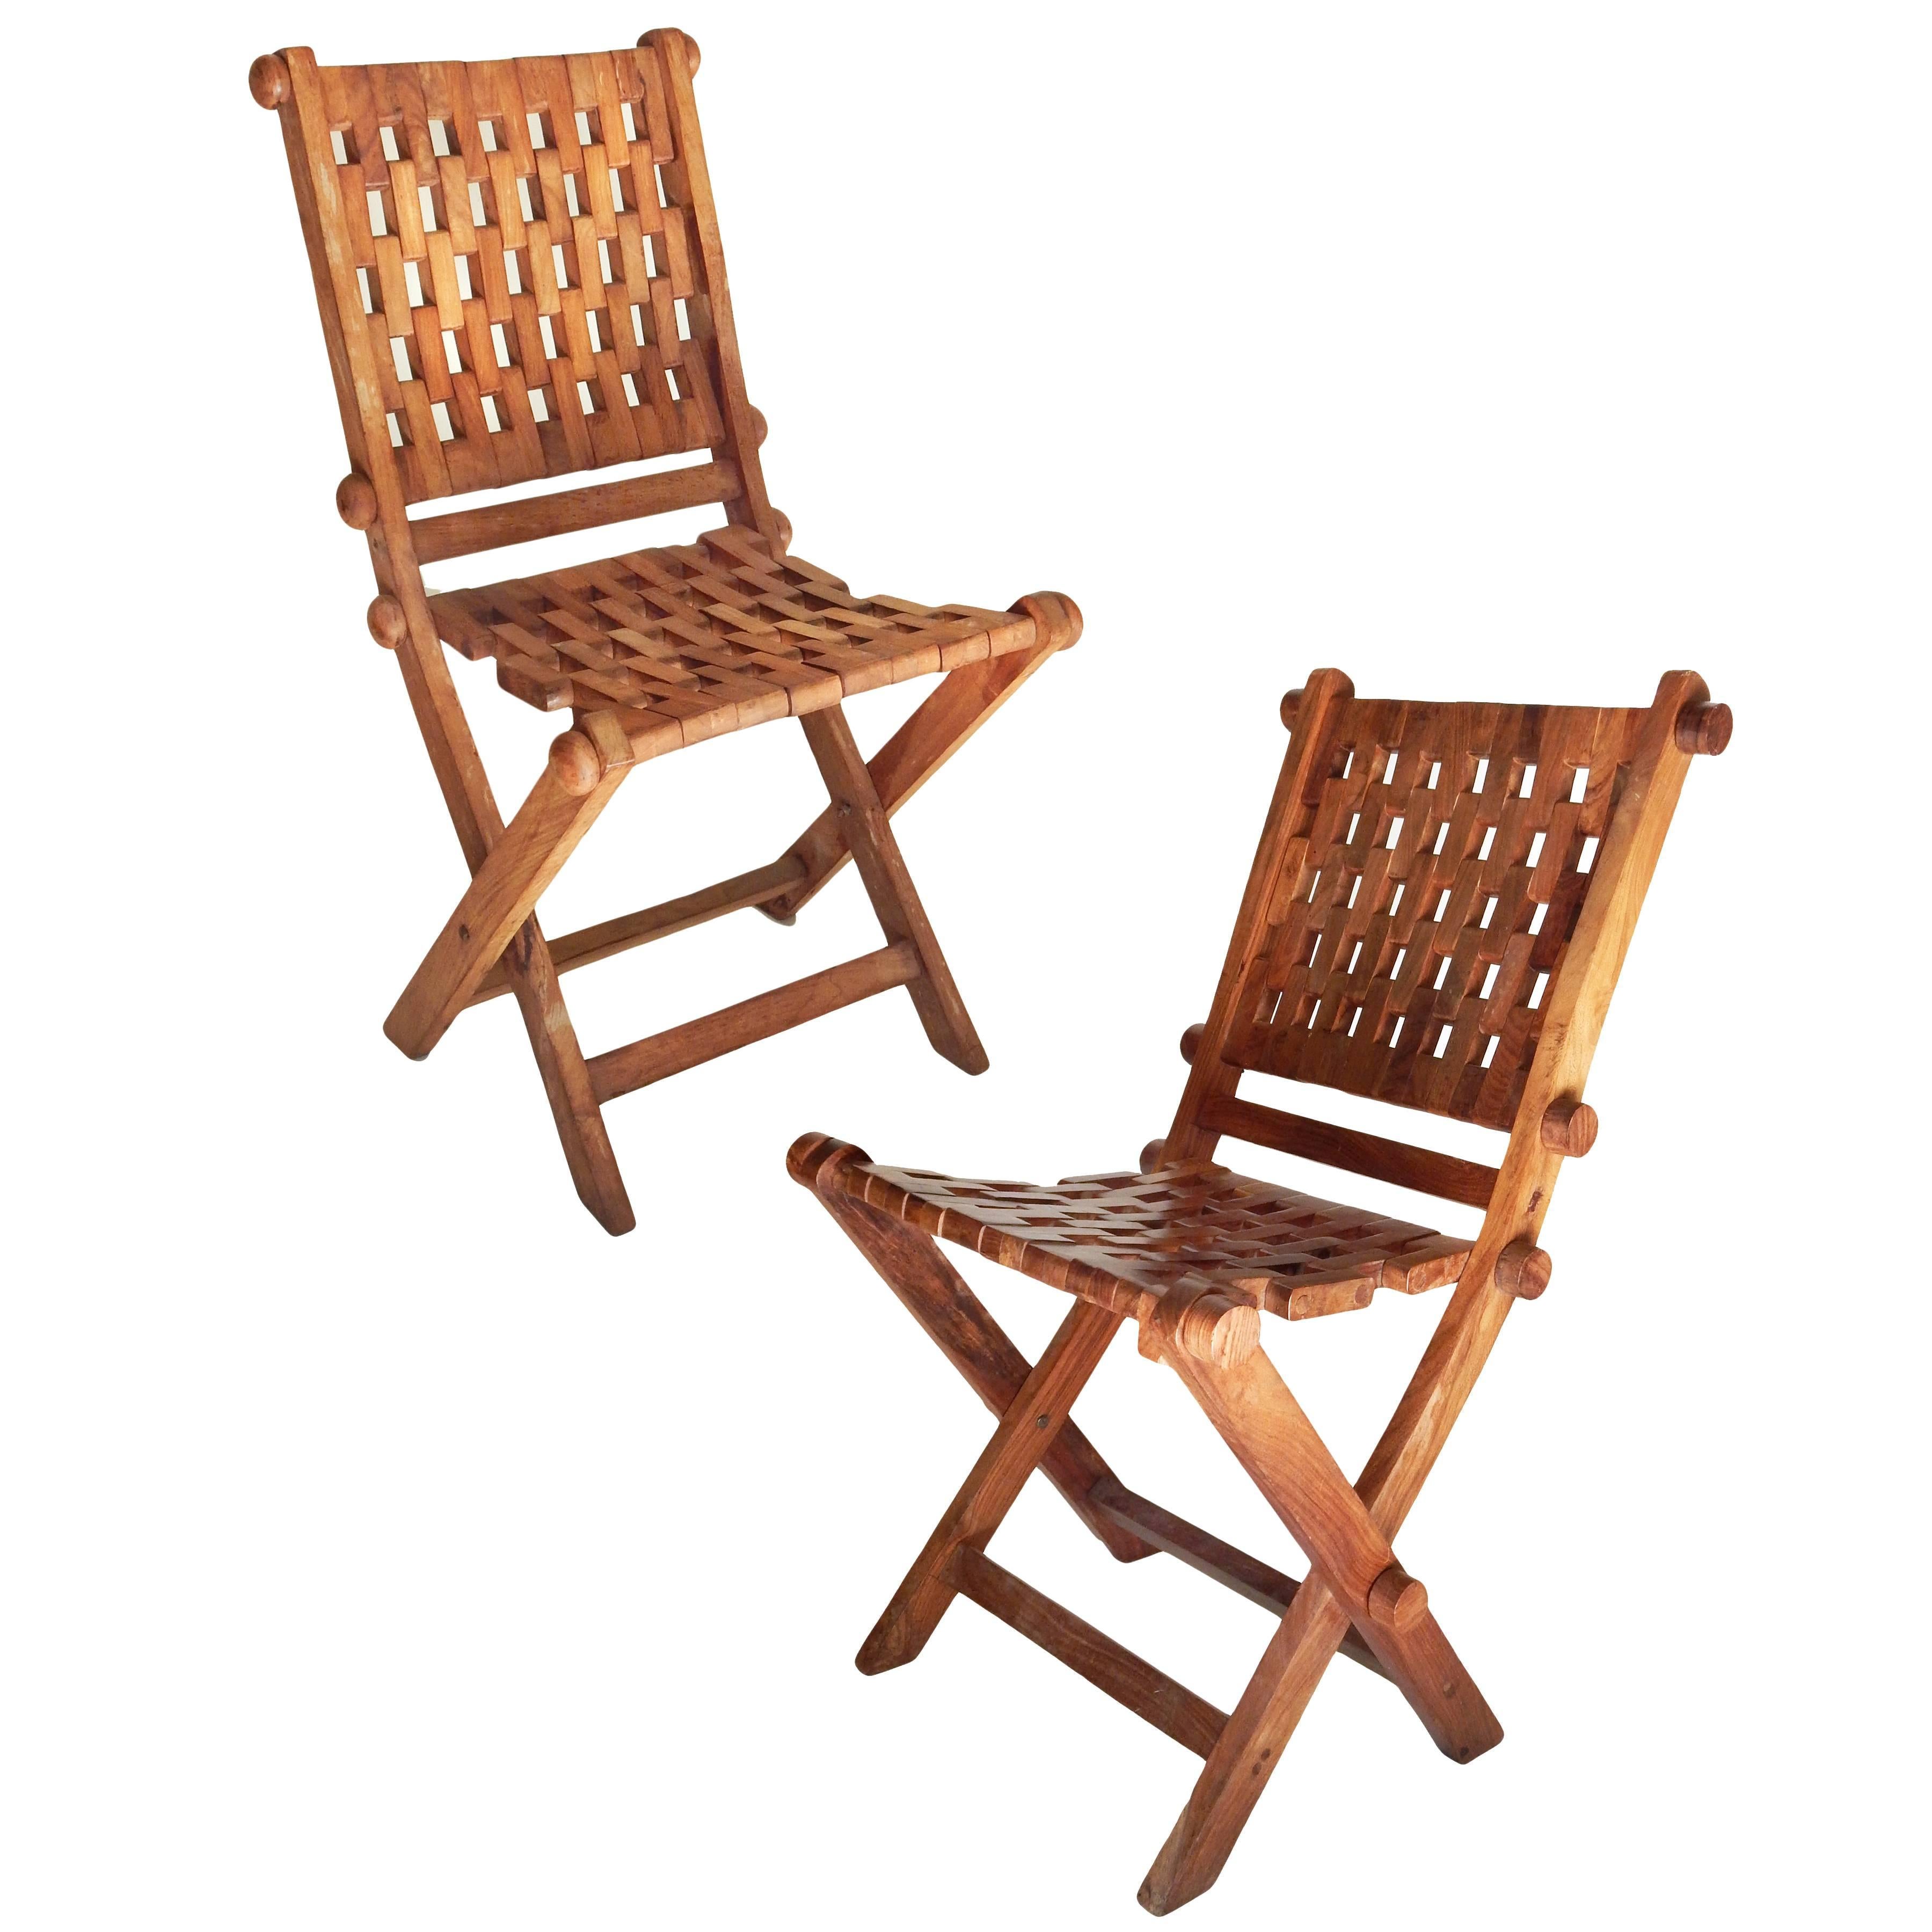 Great Pair of Handmade Folding Chairs